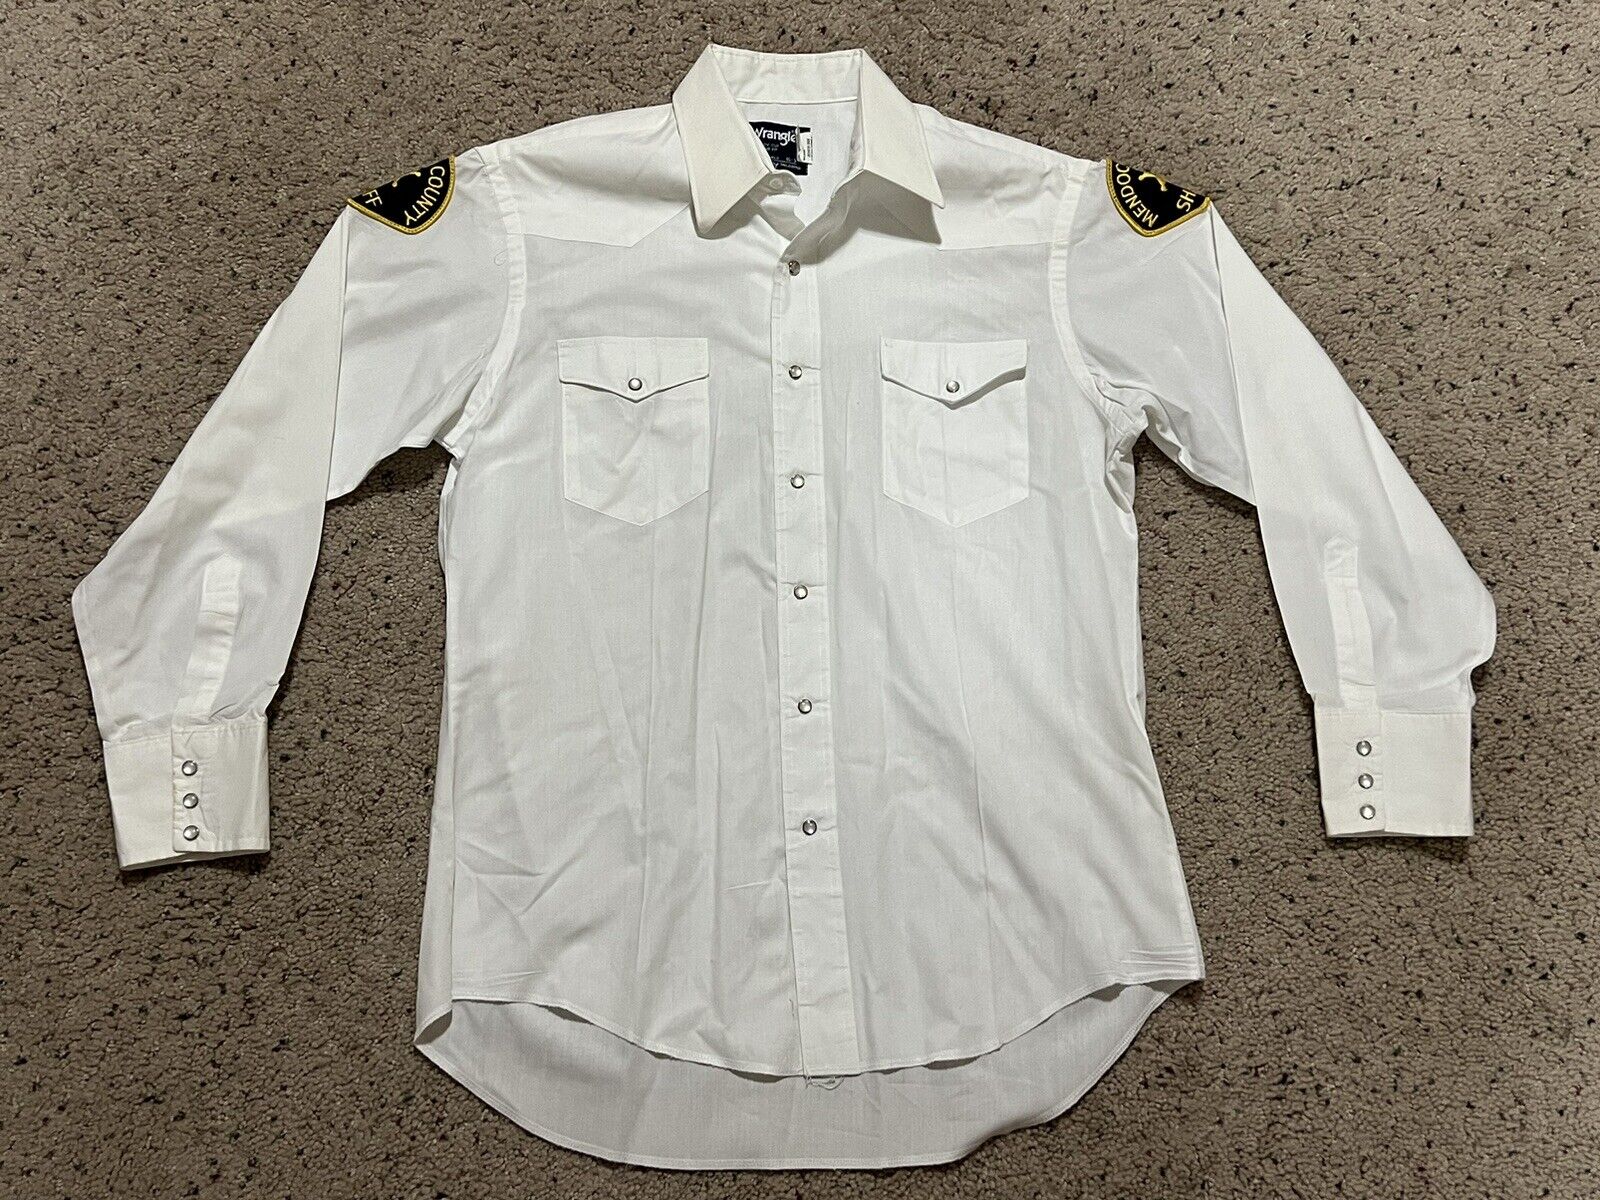 Vintage Mendicino County Sheriff Wrangler Pearl Snap Uniform Duty Shirt Sz 16-34